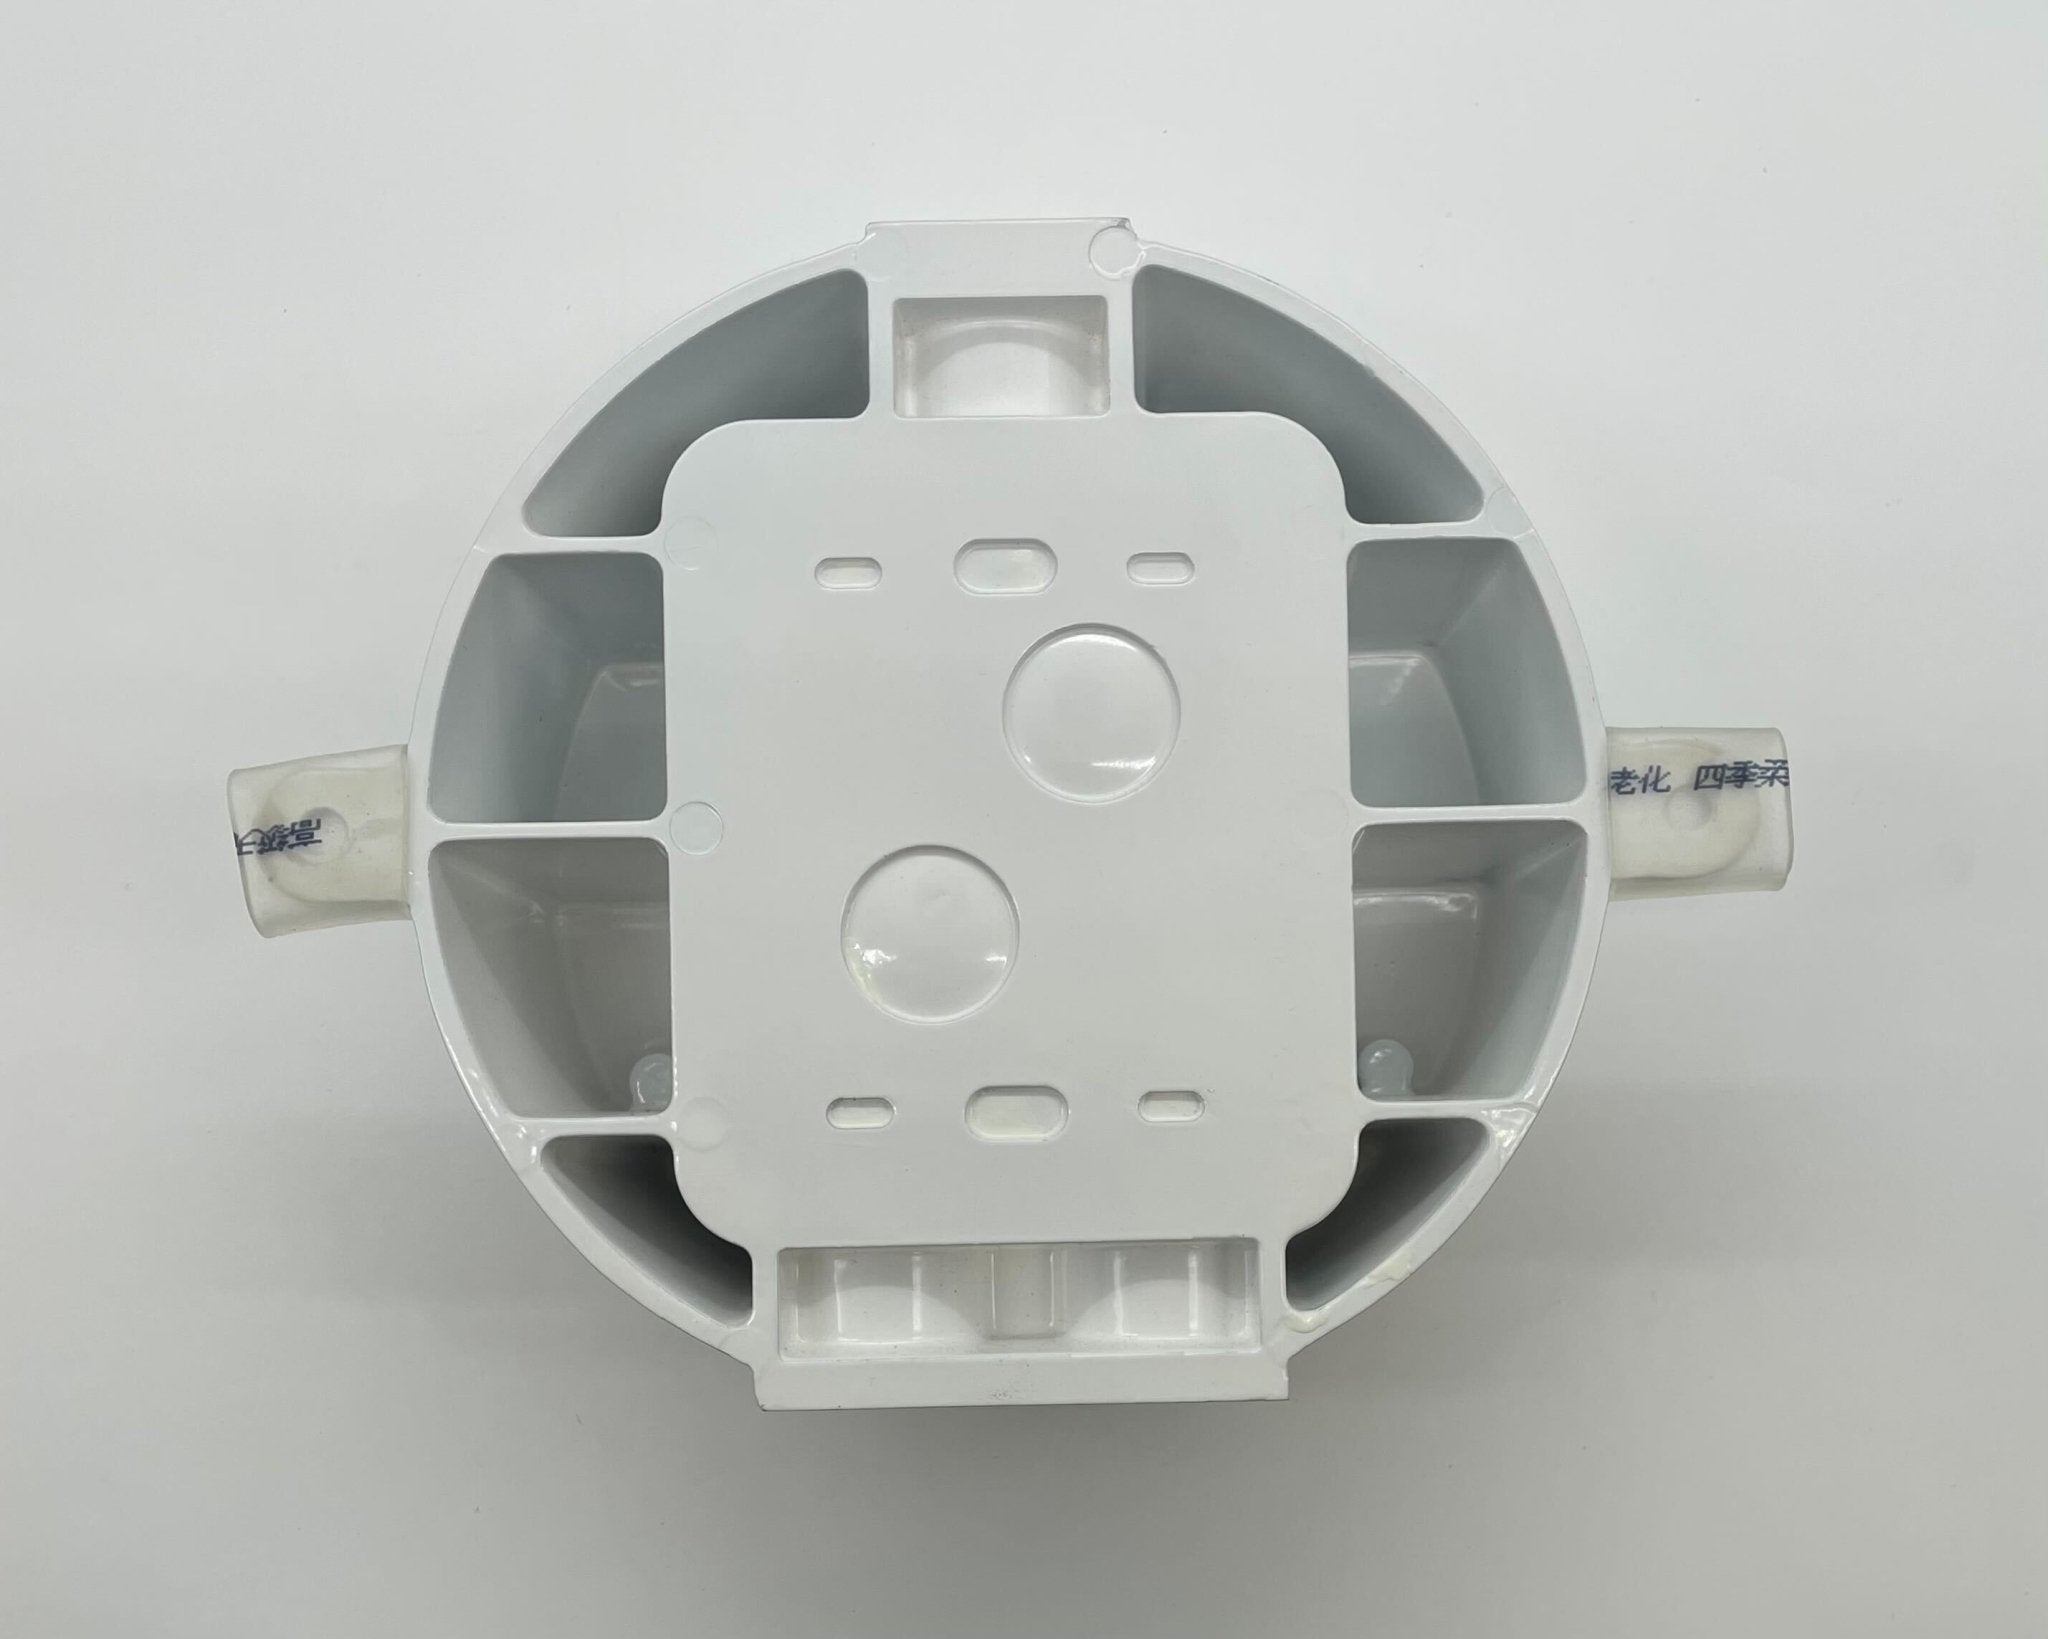 System Sensor MWBBCW Ceiling Metal Weatherproof Back Box - The Fire Alarm Supplier